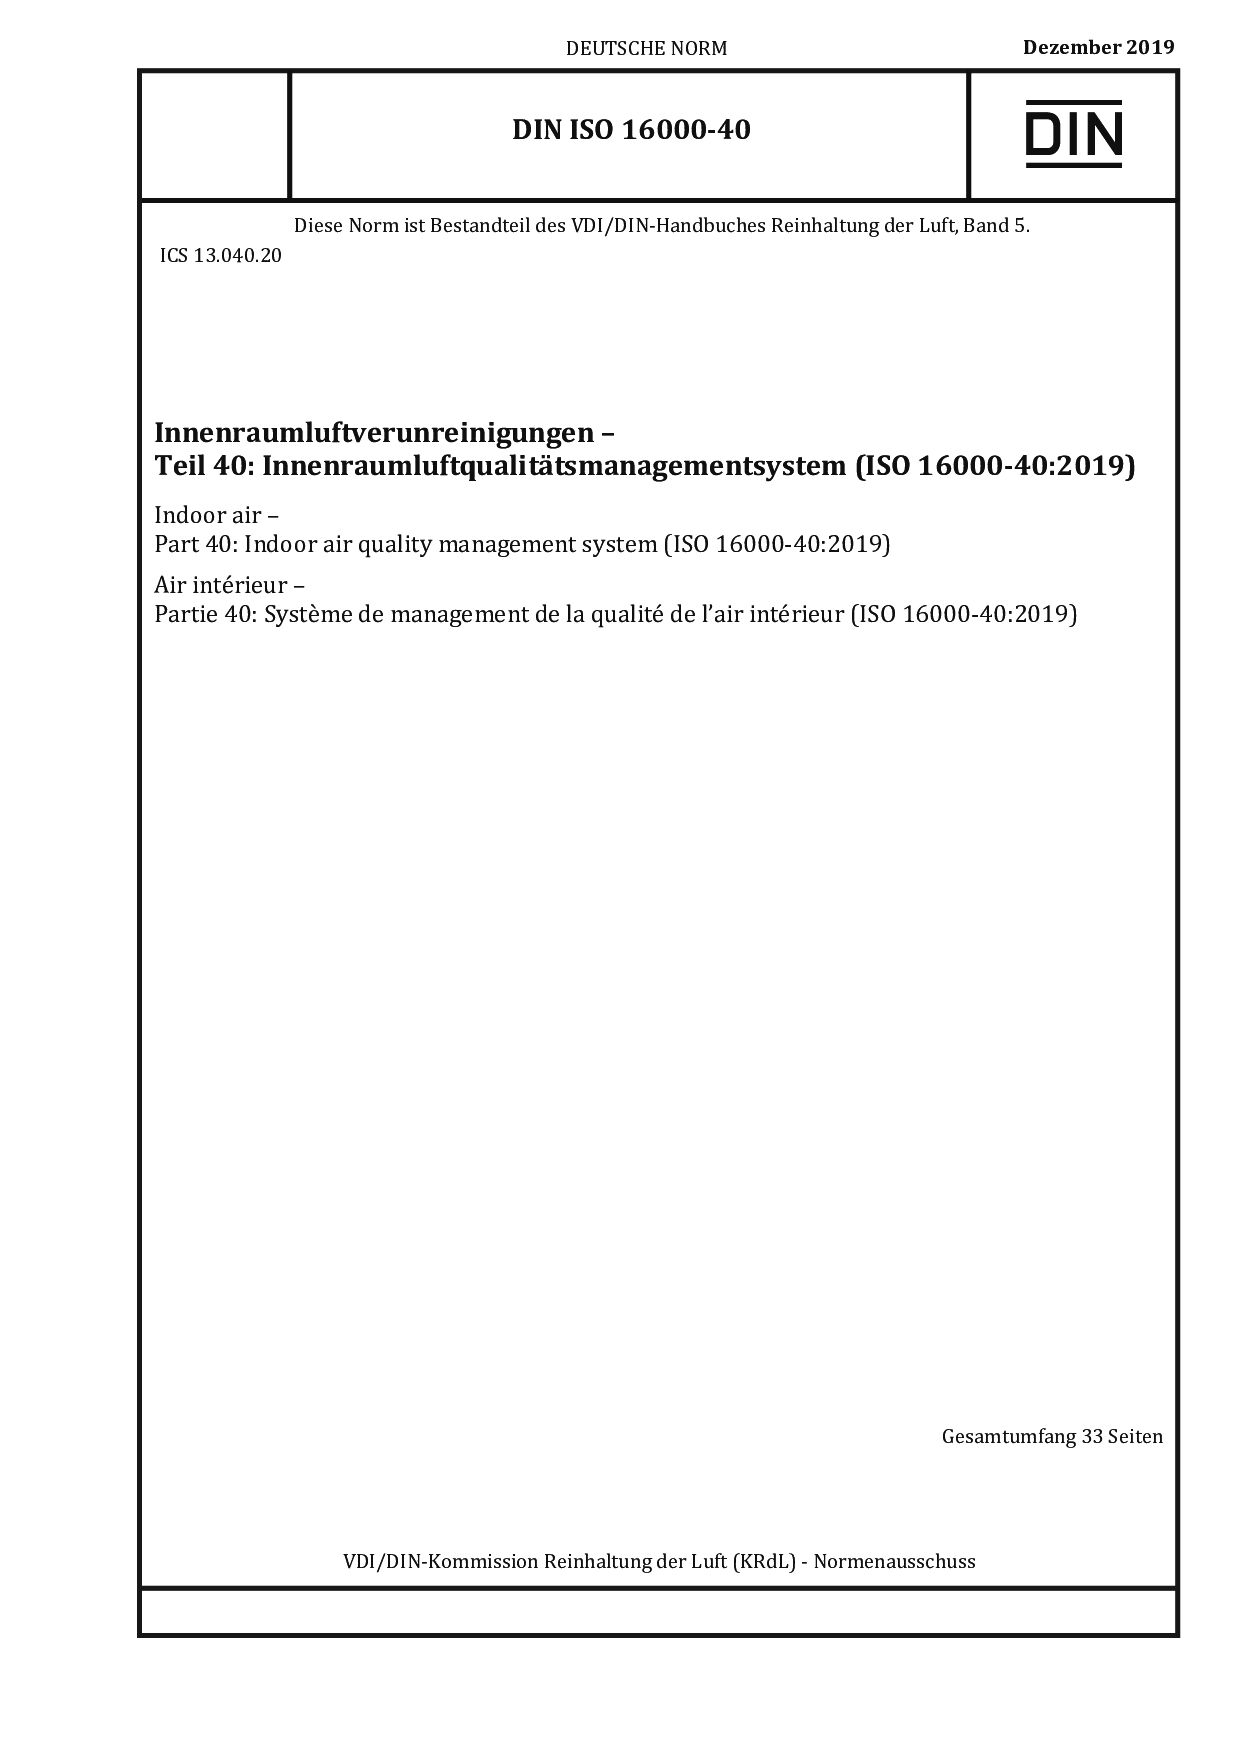 DIN ISO 16000-40:2019